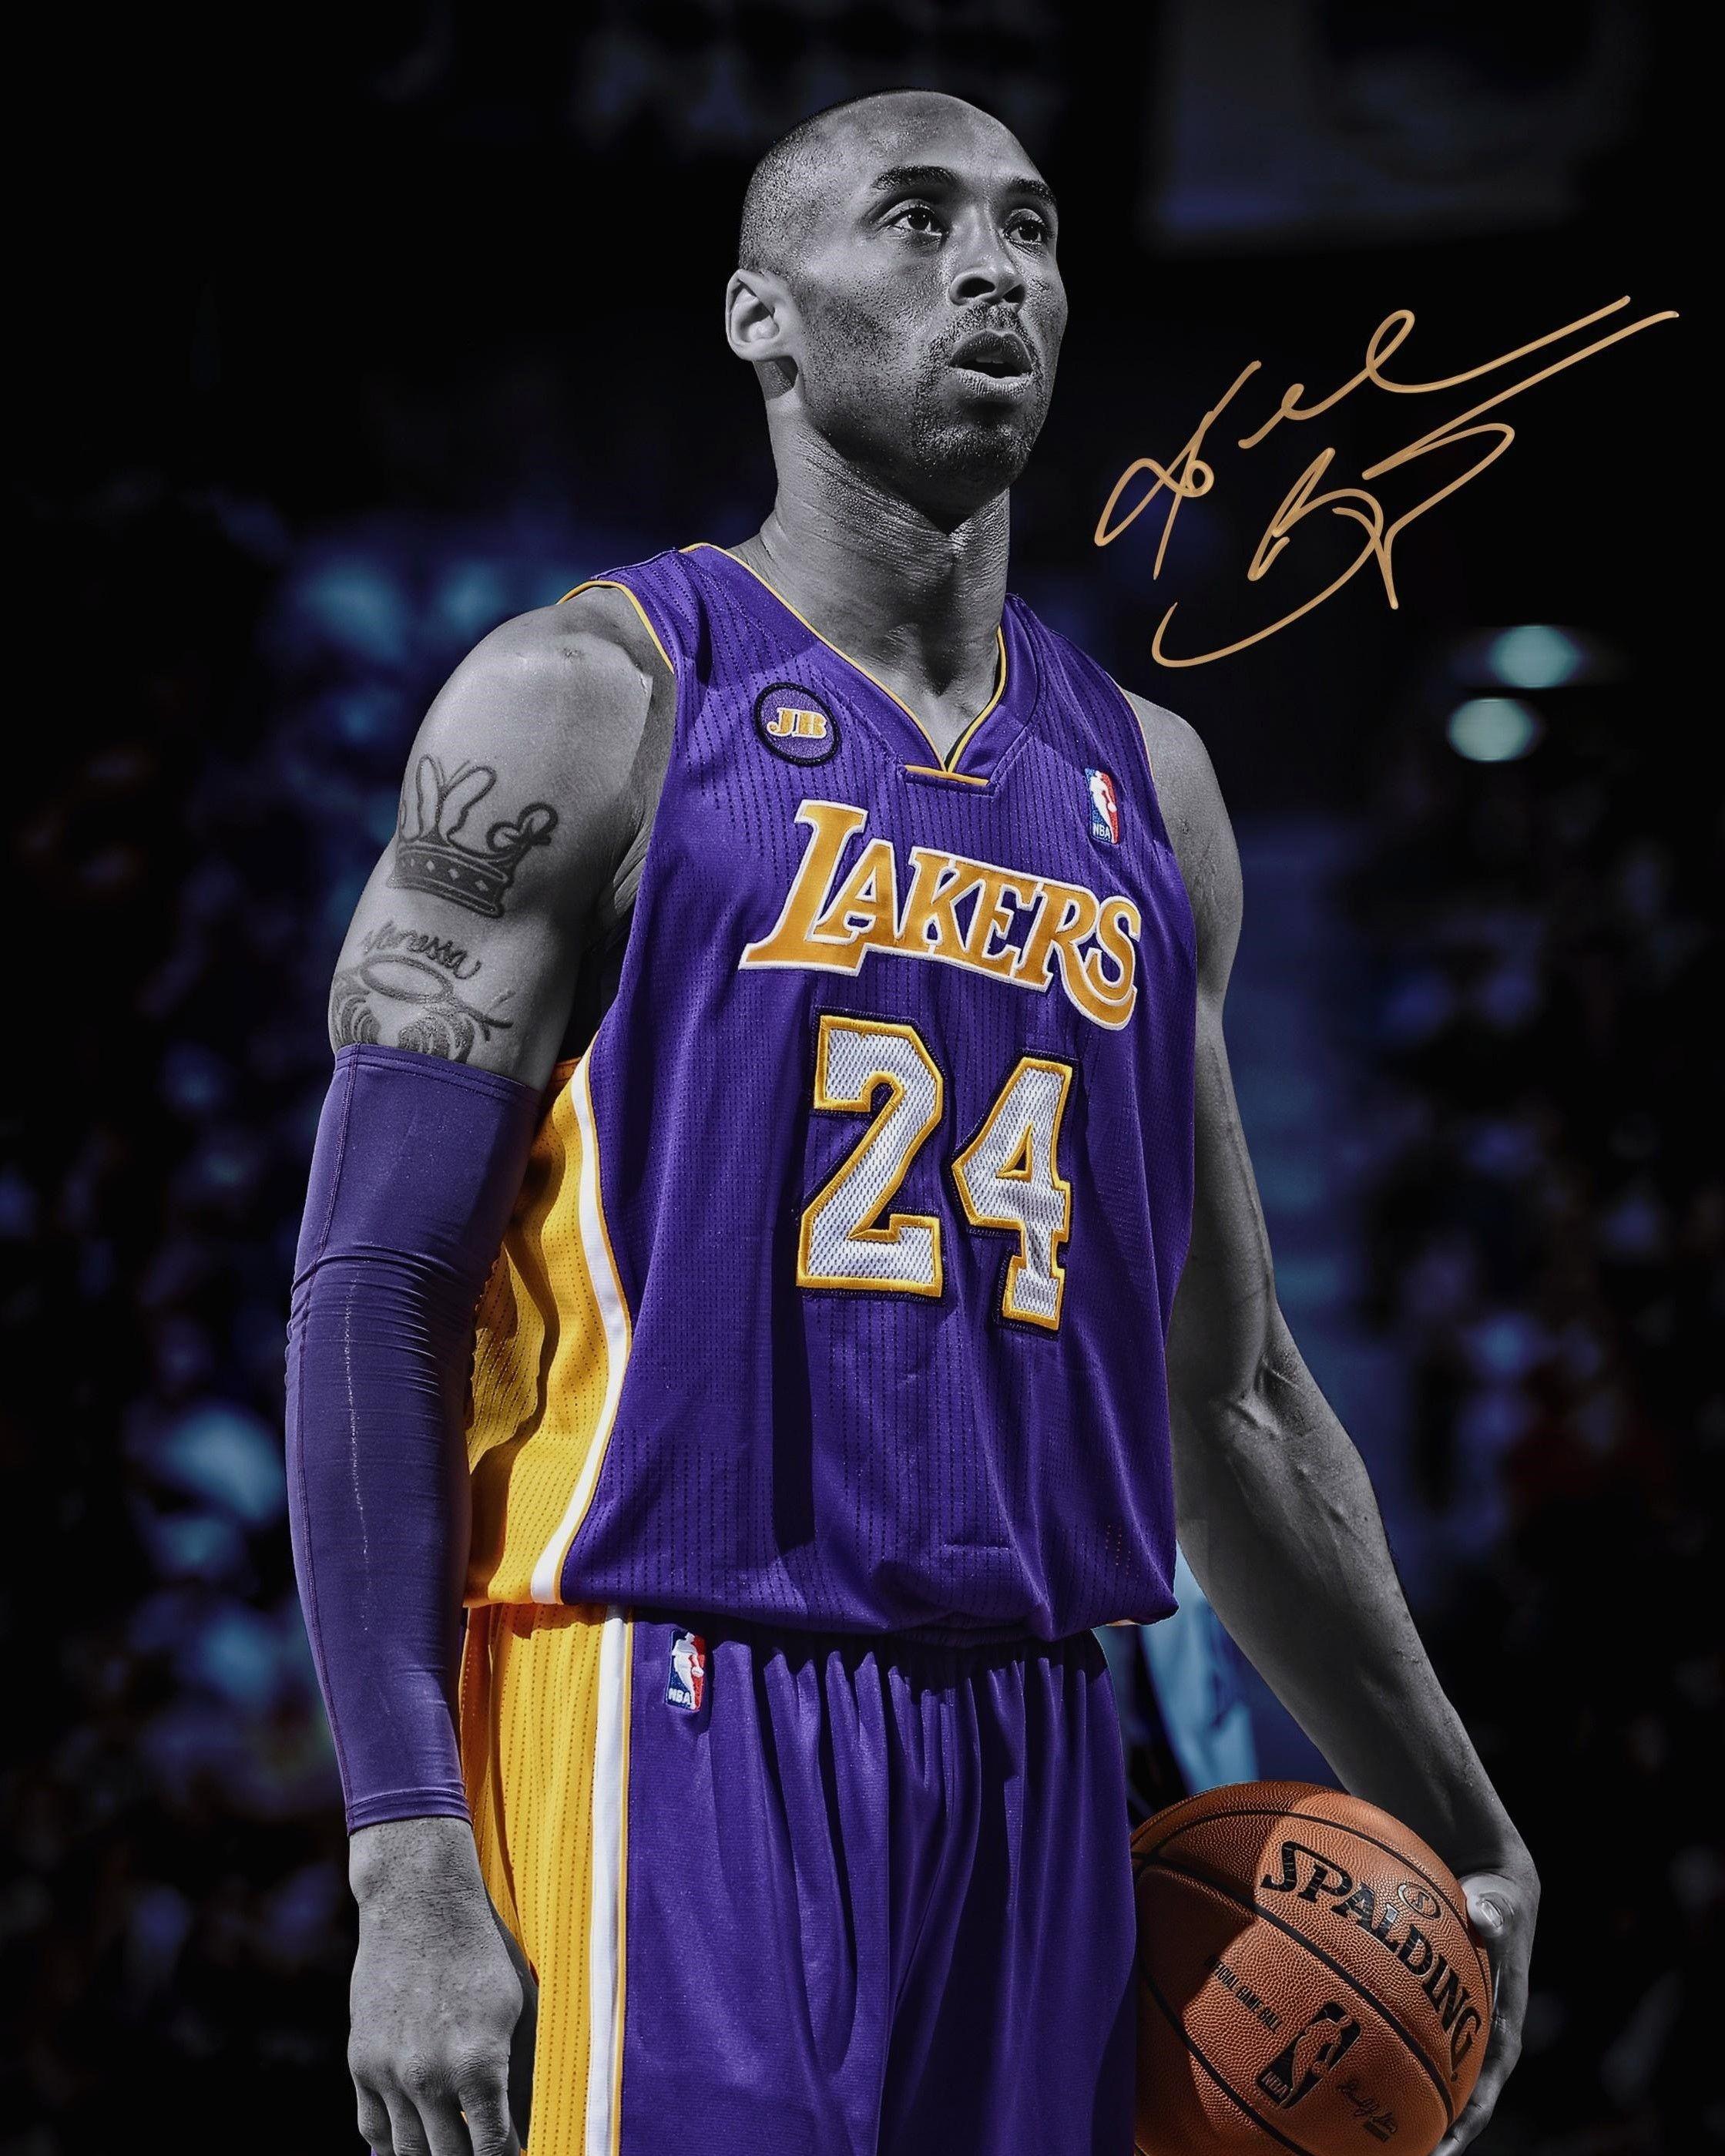 Kobe Bryant HD Image Photo 1080p Wallpaper Downloads